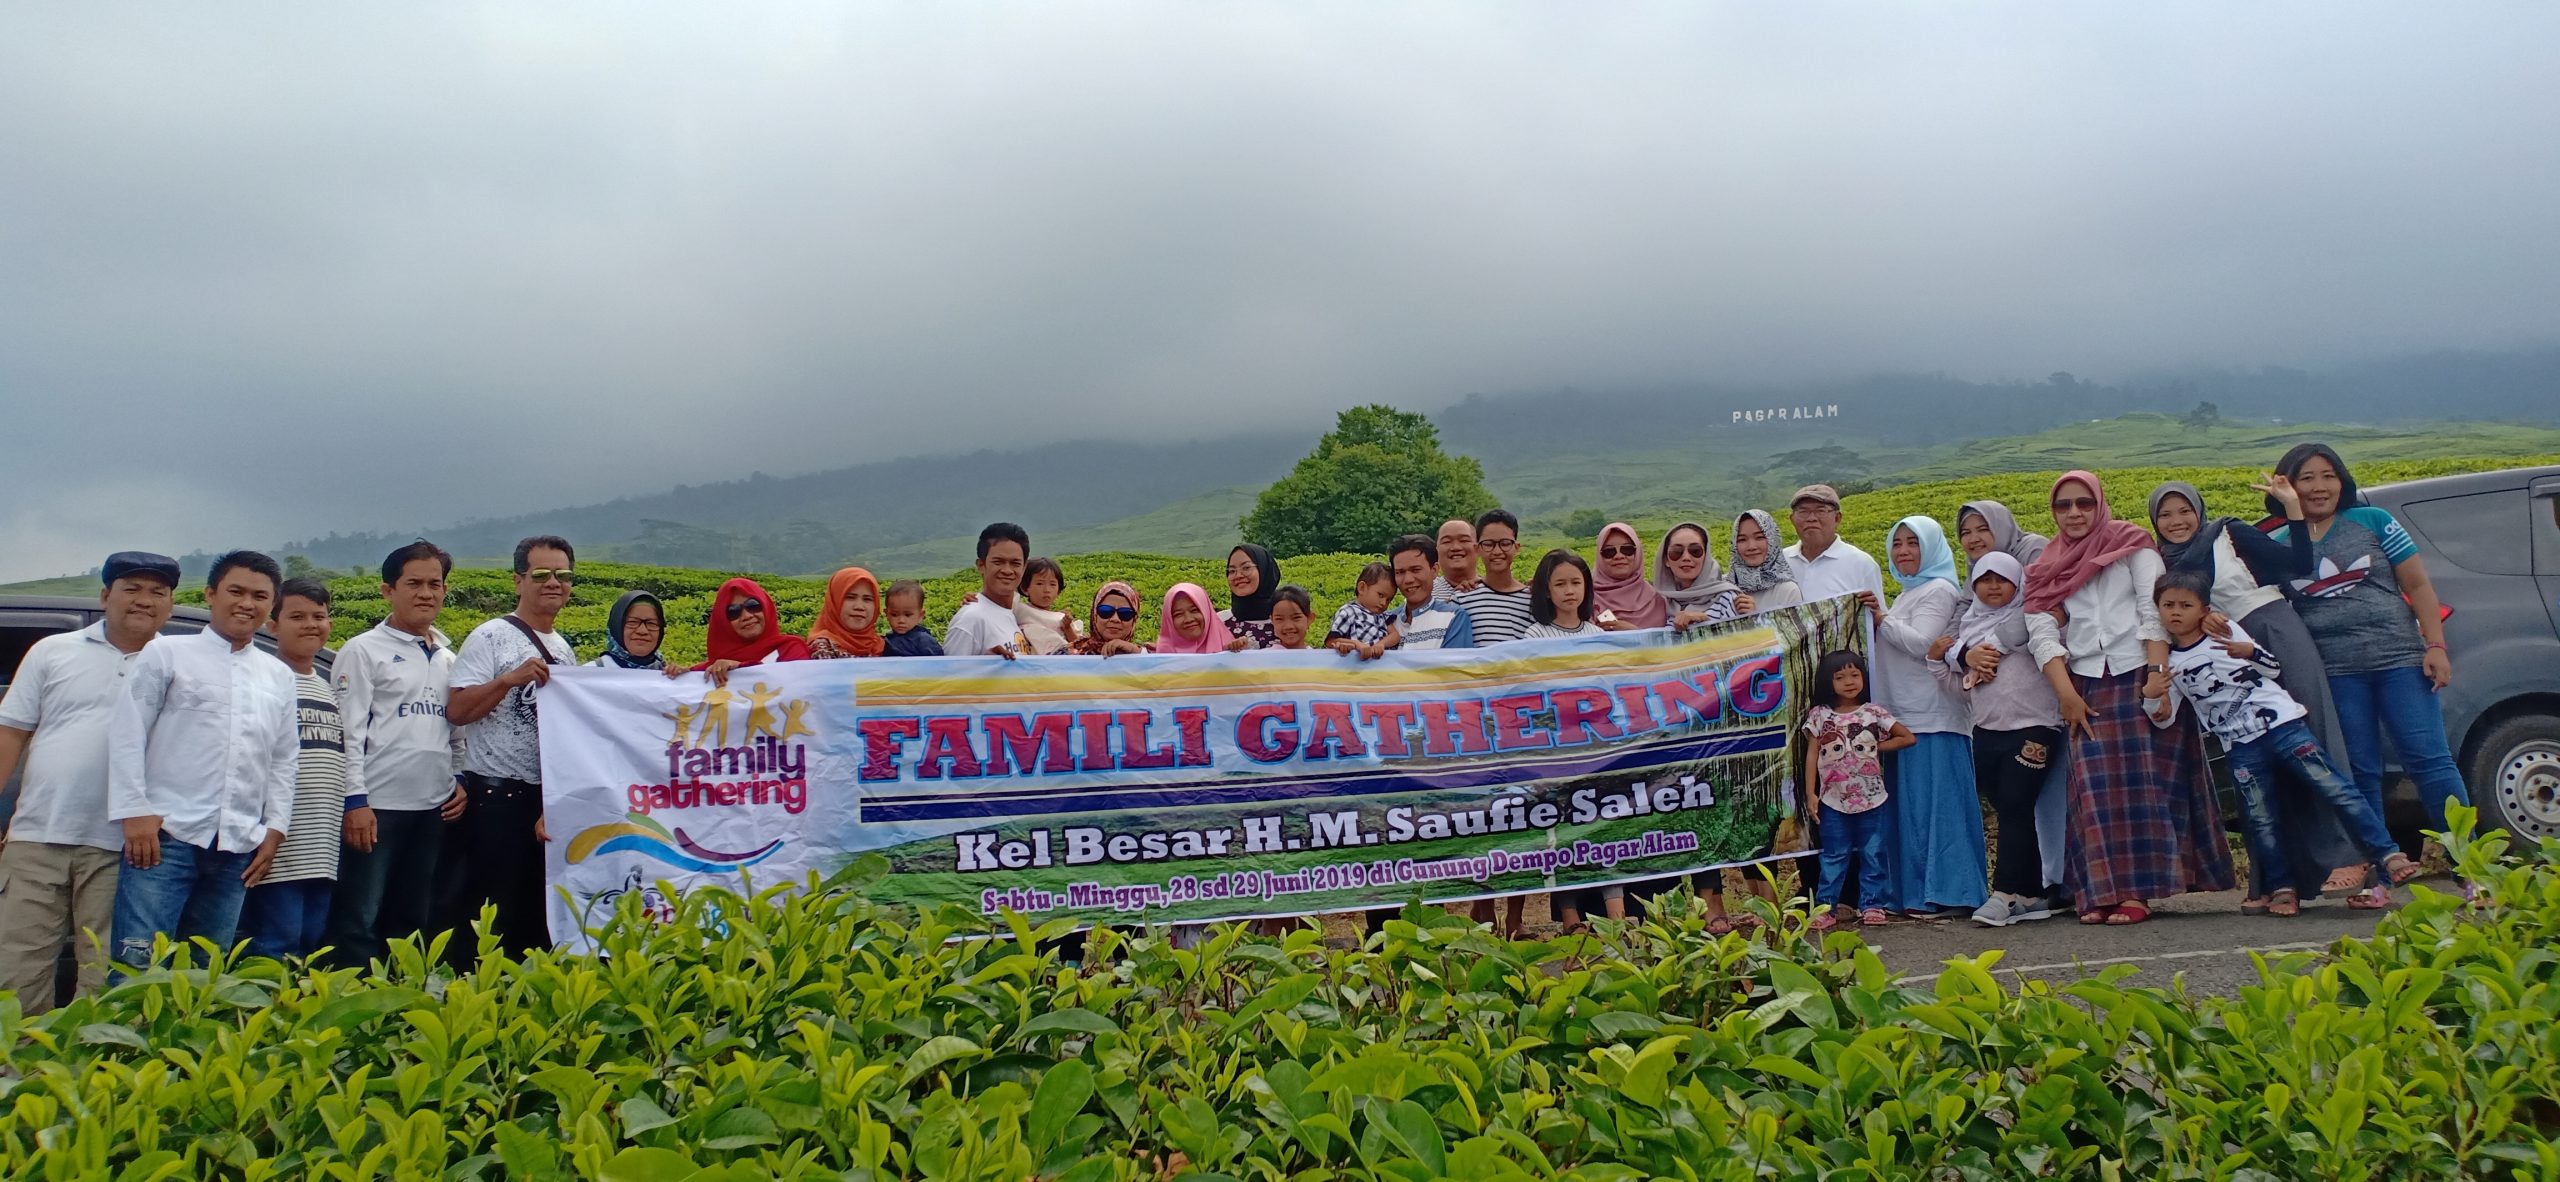 Jalin Silaturahmi Keluarga Besar H M Saufi E Saleh Lakukan Family Gathering Ke Gunung Dempo Pagar Alam Media Online